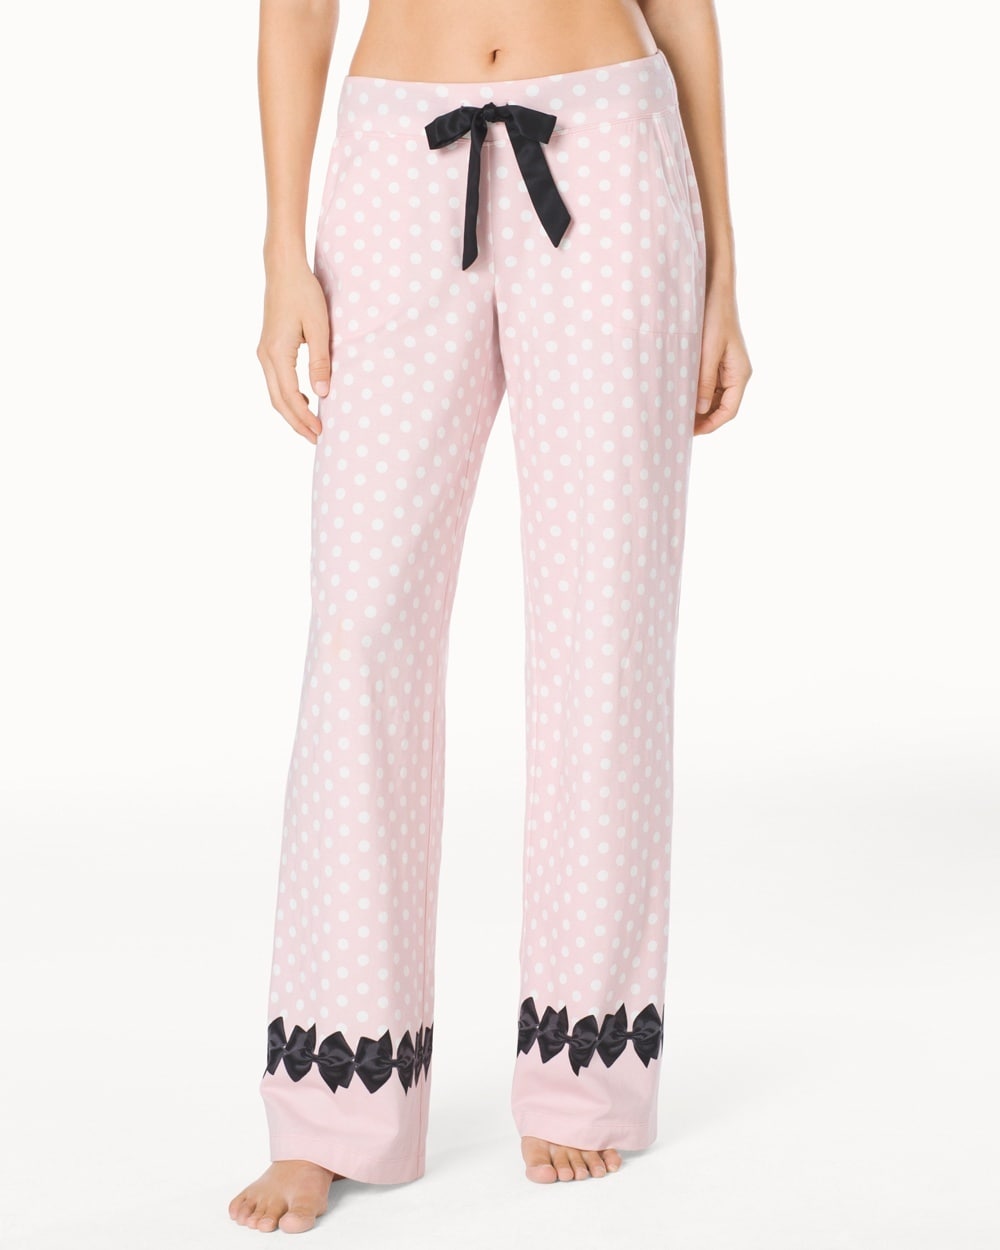 Embraceable Pajama Pants Big Dot Pink Bows Border